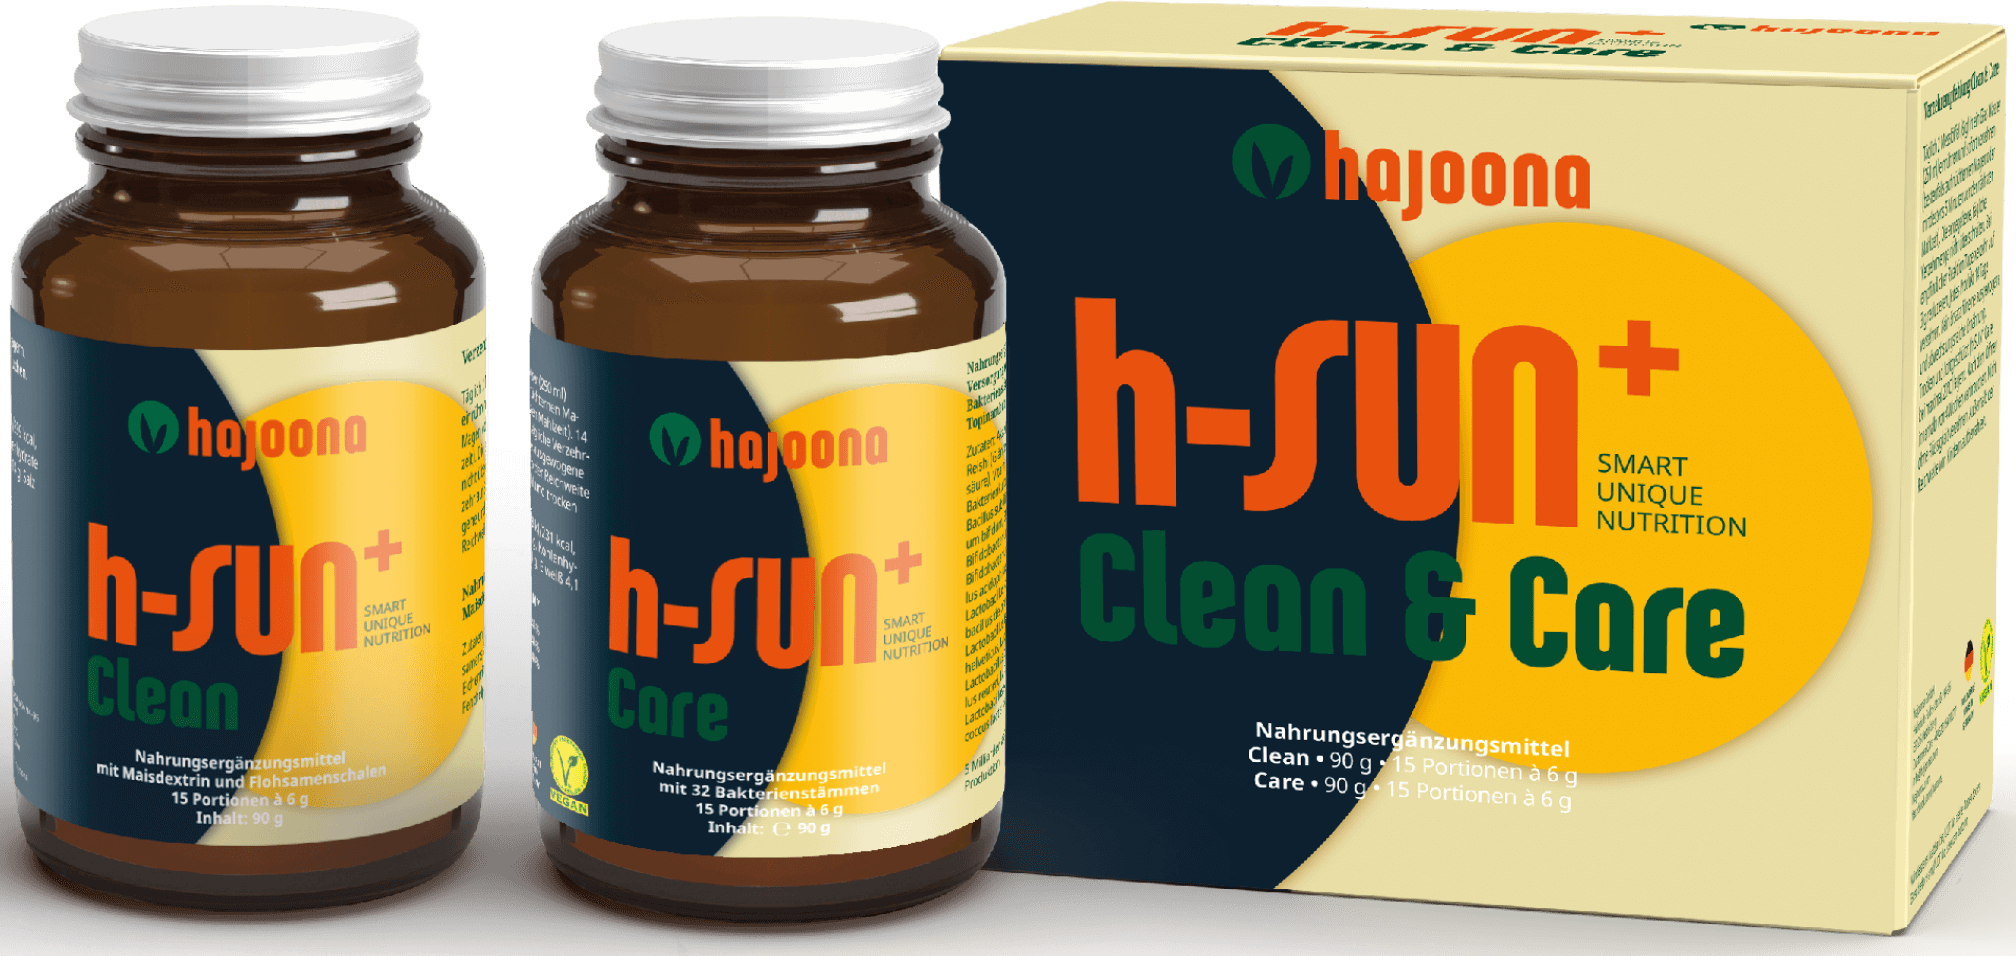 Produktbild h-sun +Clean & Care - Bild vom hajoona.com